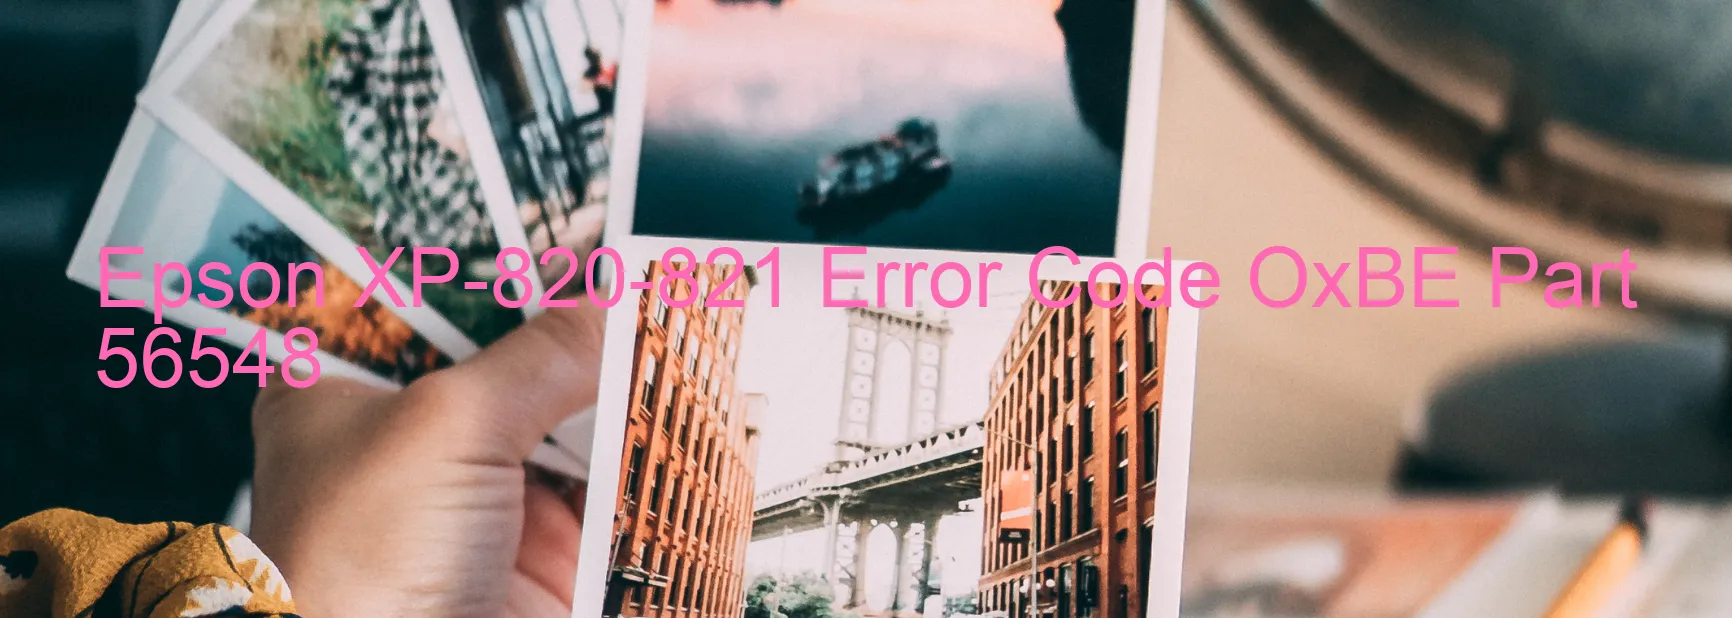 Epson XP-820-821 Error Code OxBE Part 56548